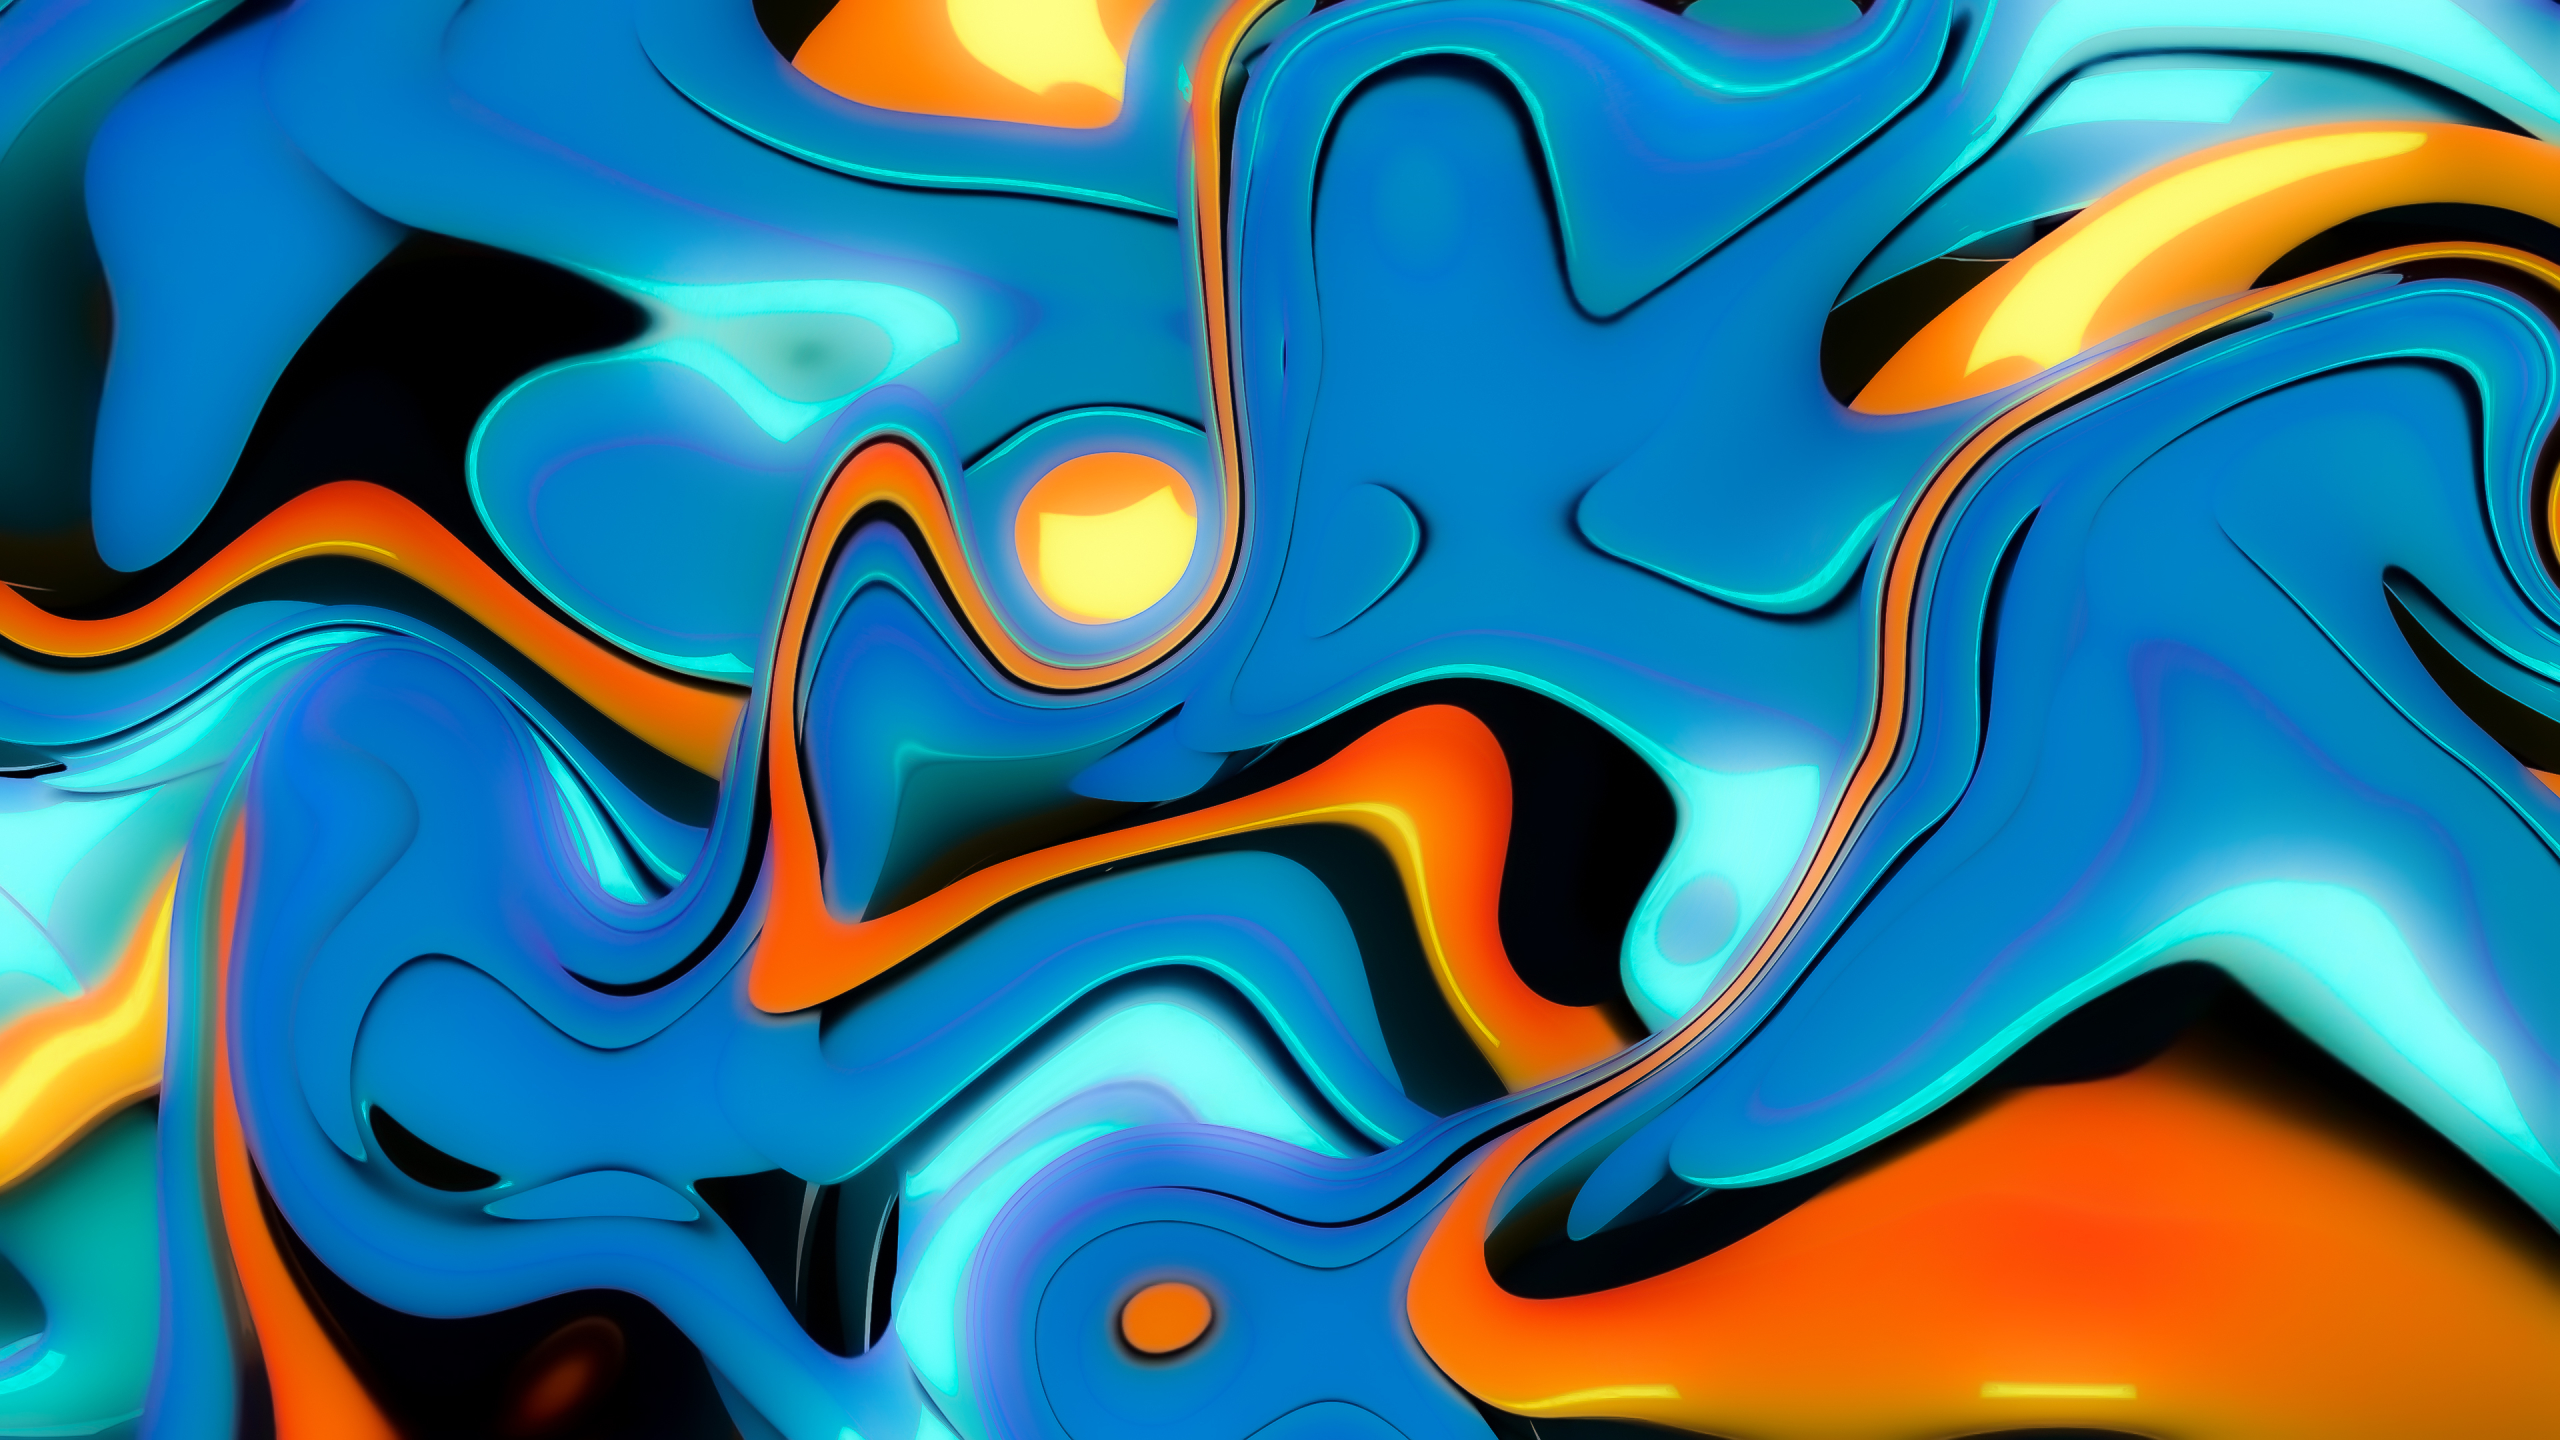 New Cool Swirl 4K Art Wallpapers